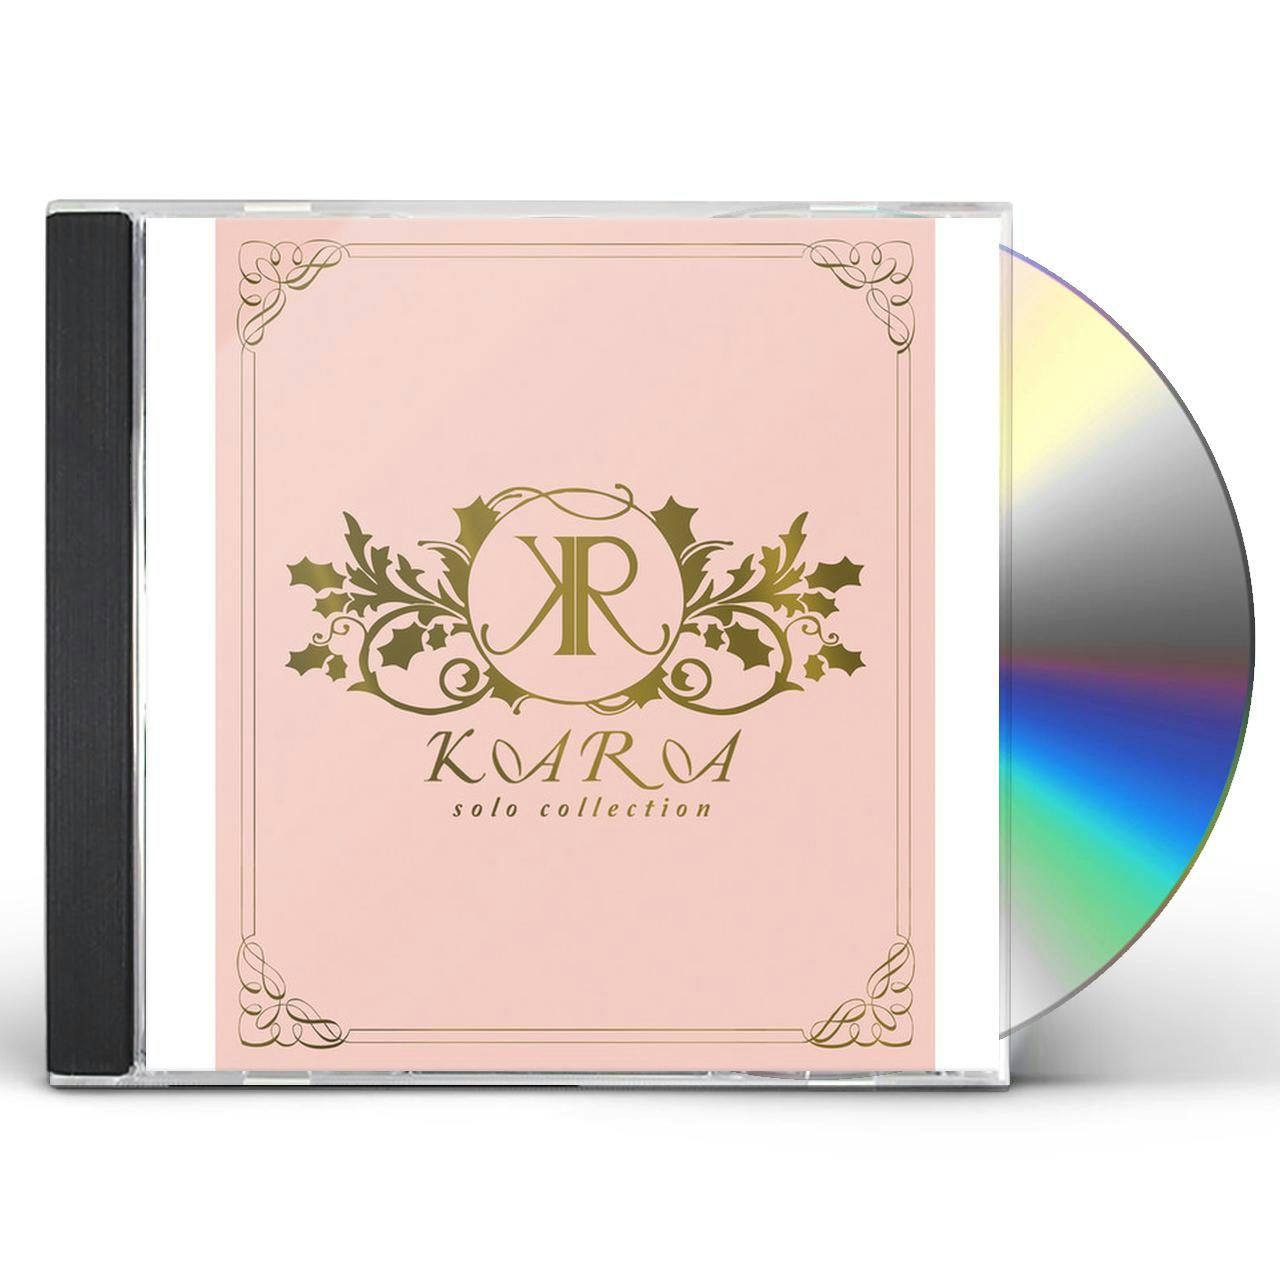 Kara Solo Collection (CD + DVD + Poster Set) (台湾限定盤) - 邦楽